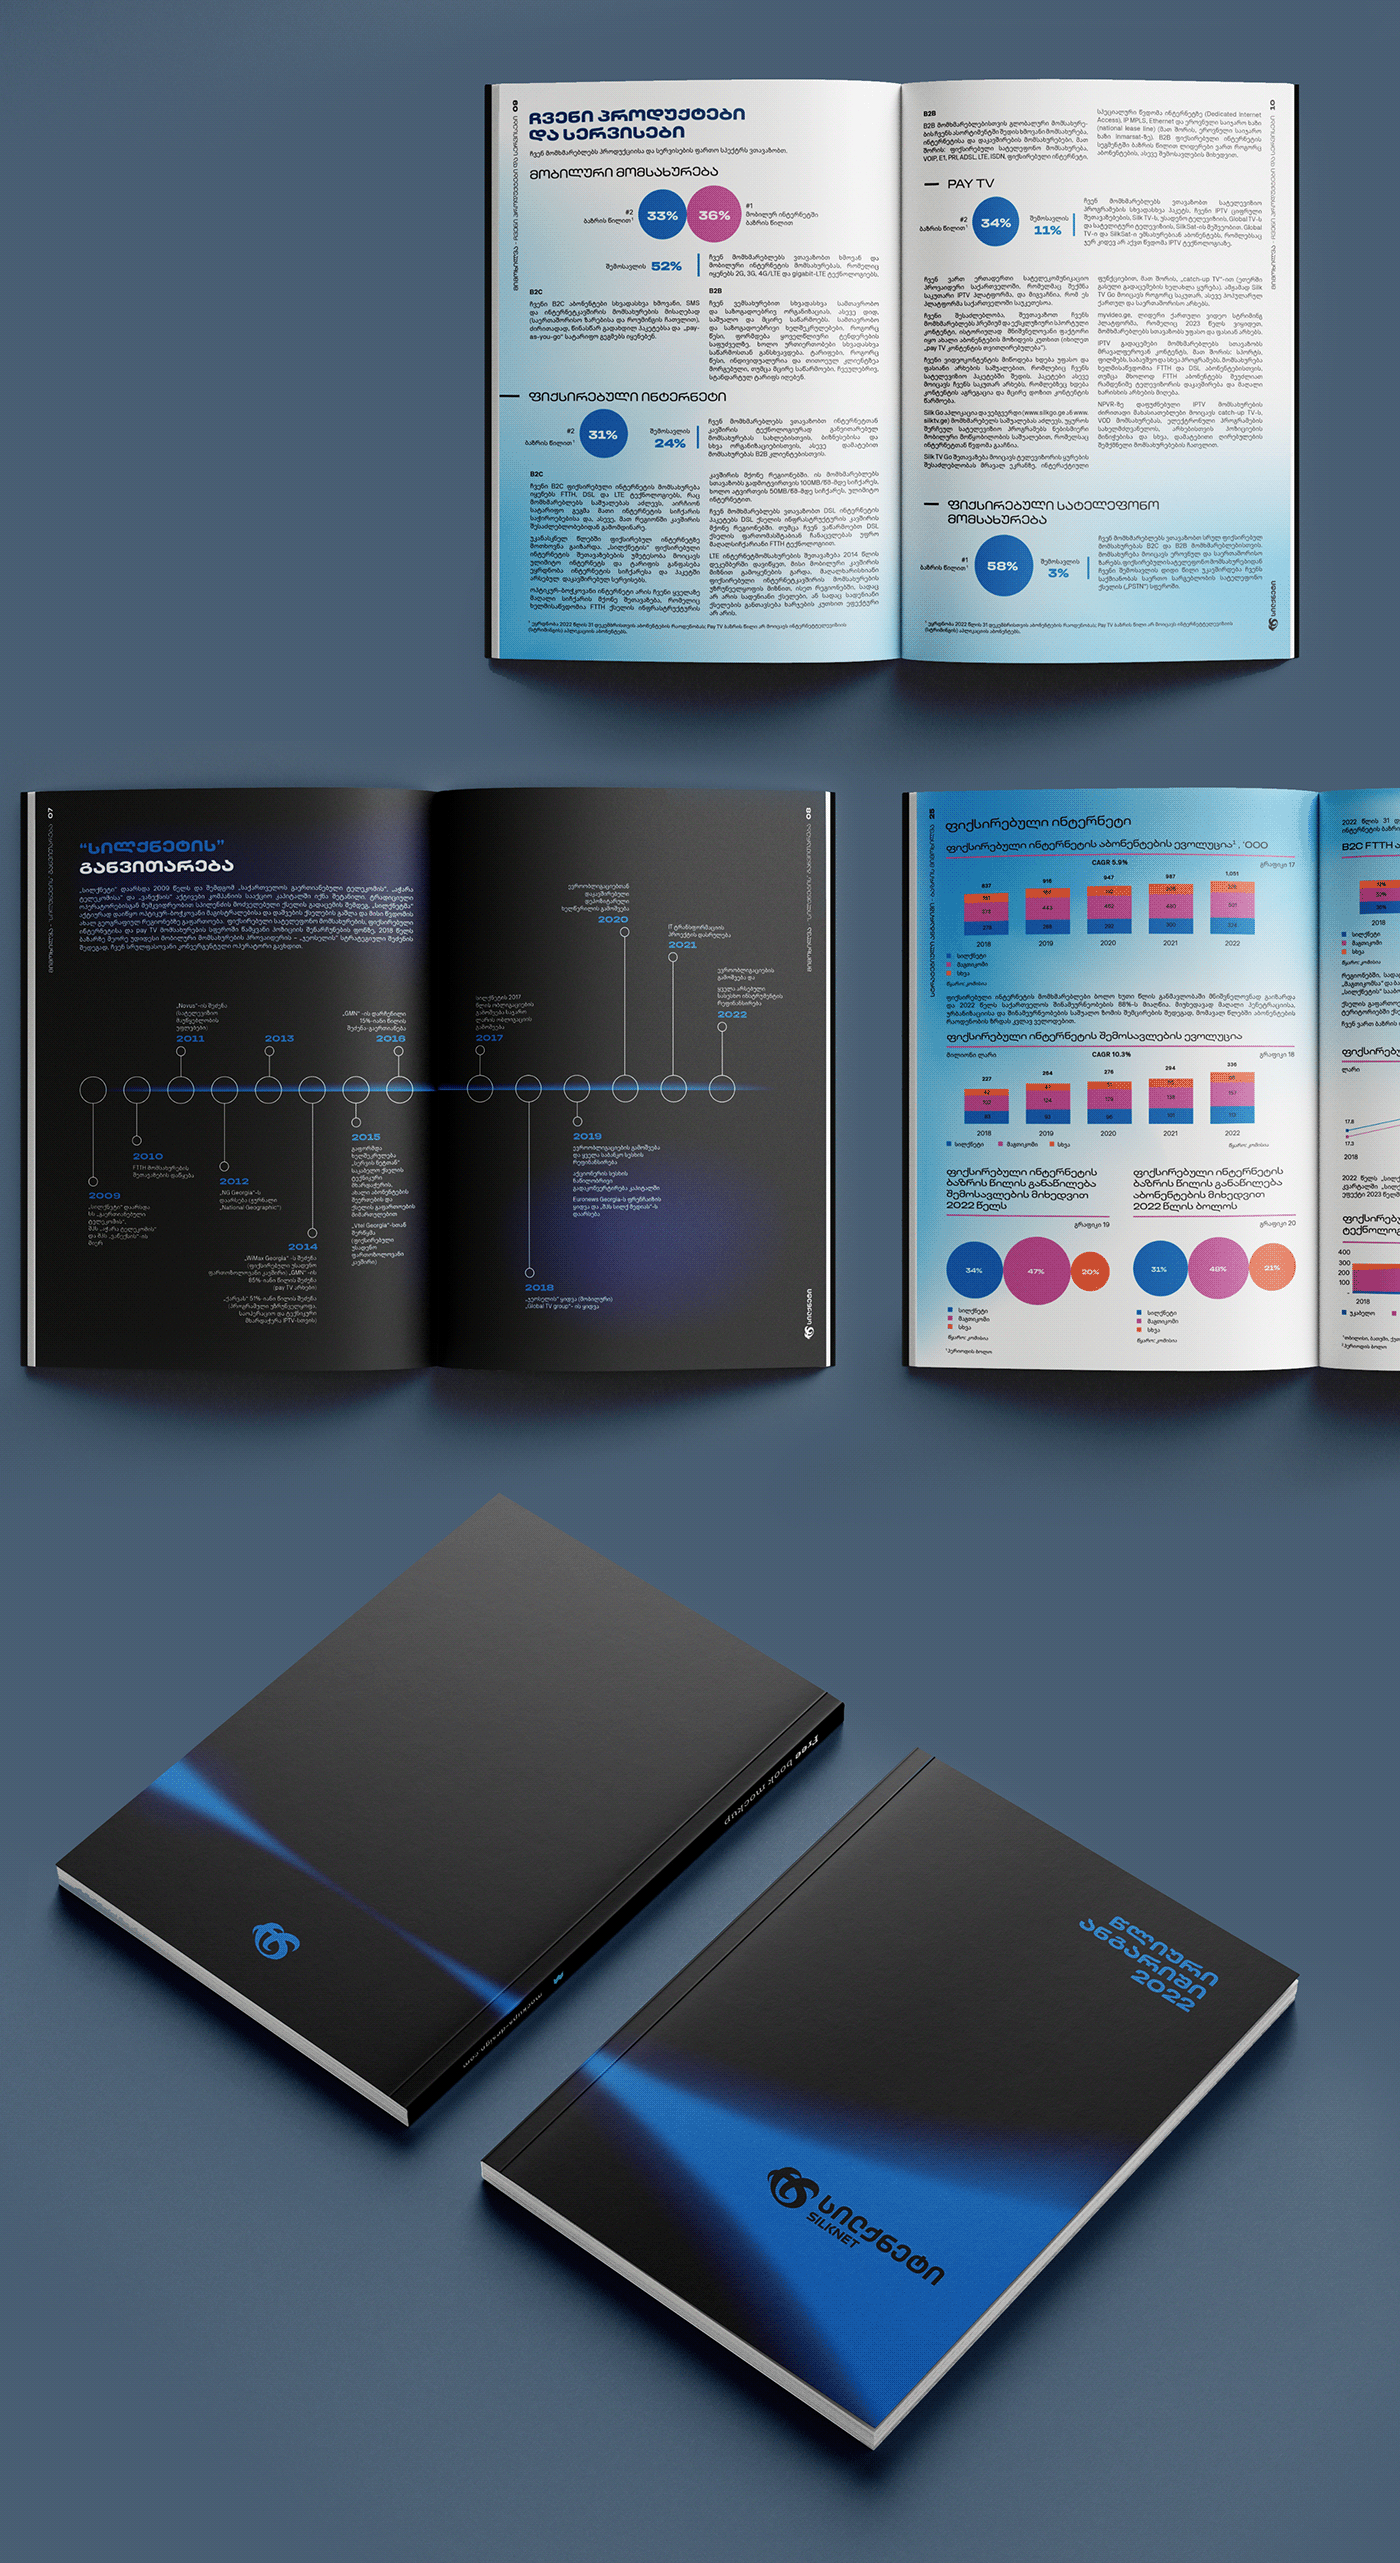 Annual Report Design Layout InDesign brochure digital financial Adobe InDesign Adobre illustrator charts and graphs